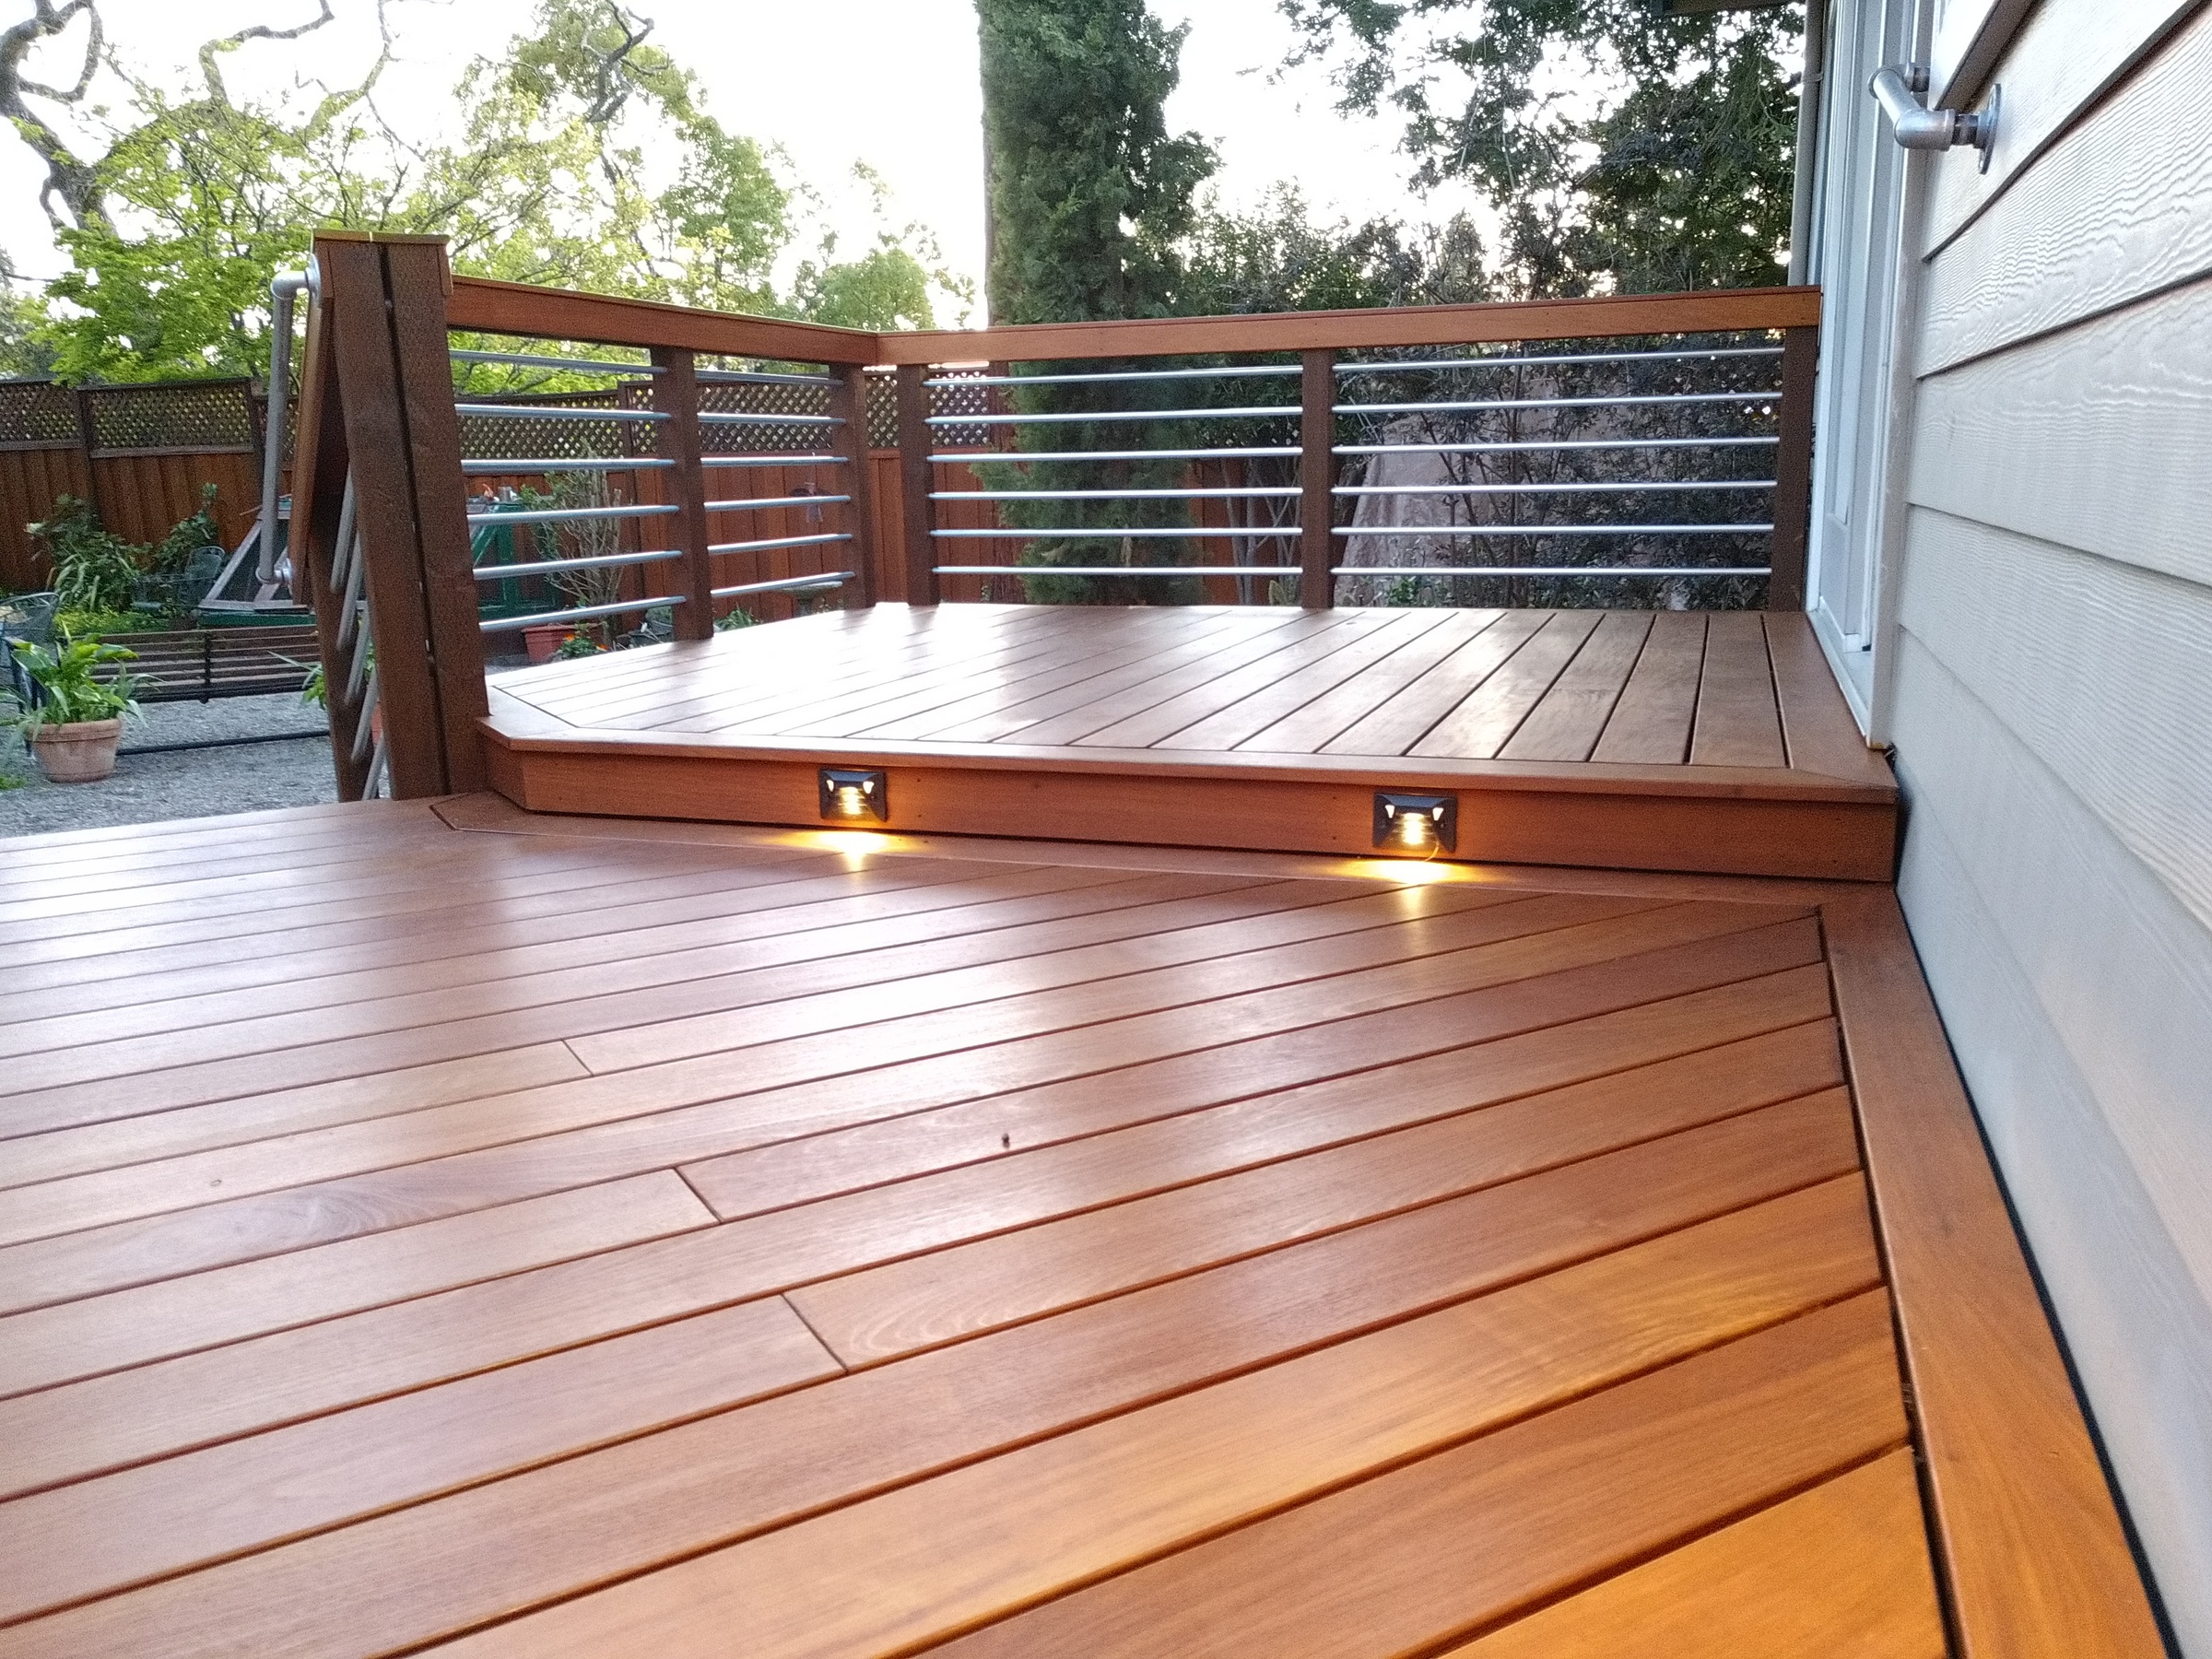 Ipe deck and lighting